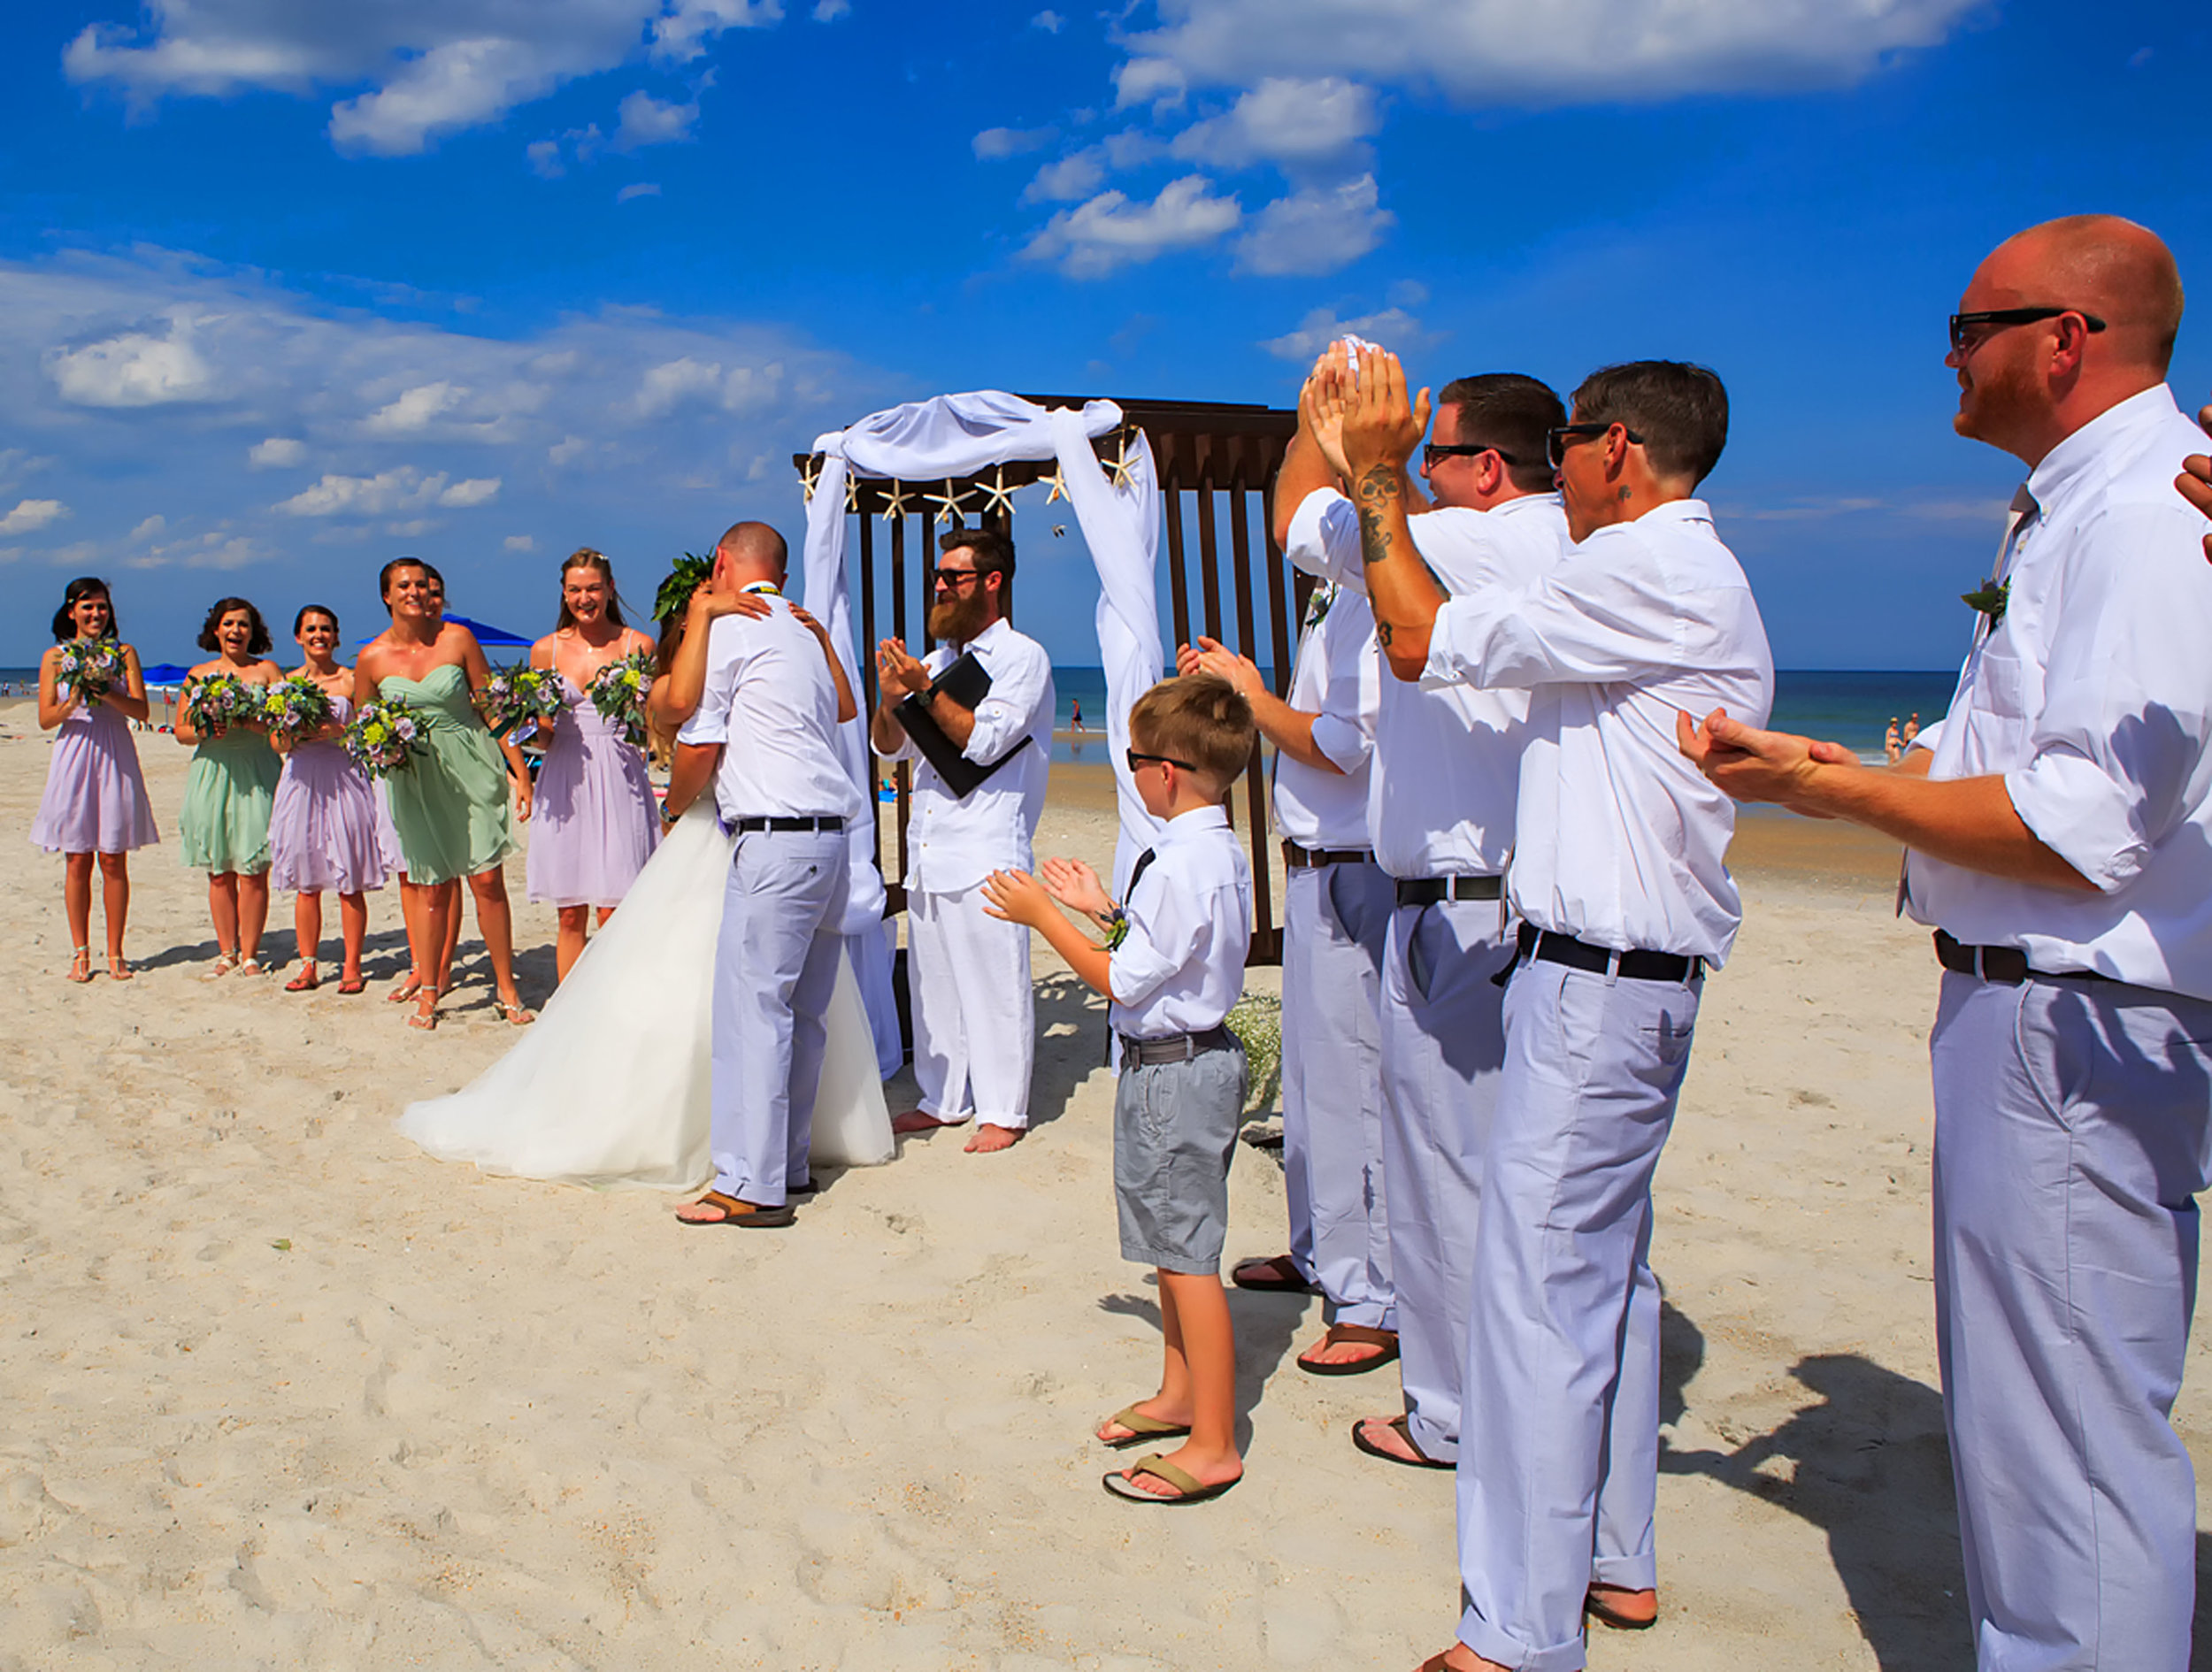 North_Carolina_Wedding_Photographer_Tiffany_Abruzzo_Ceremony_70.jpg